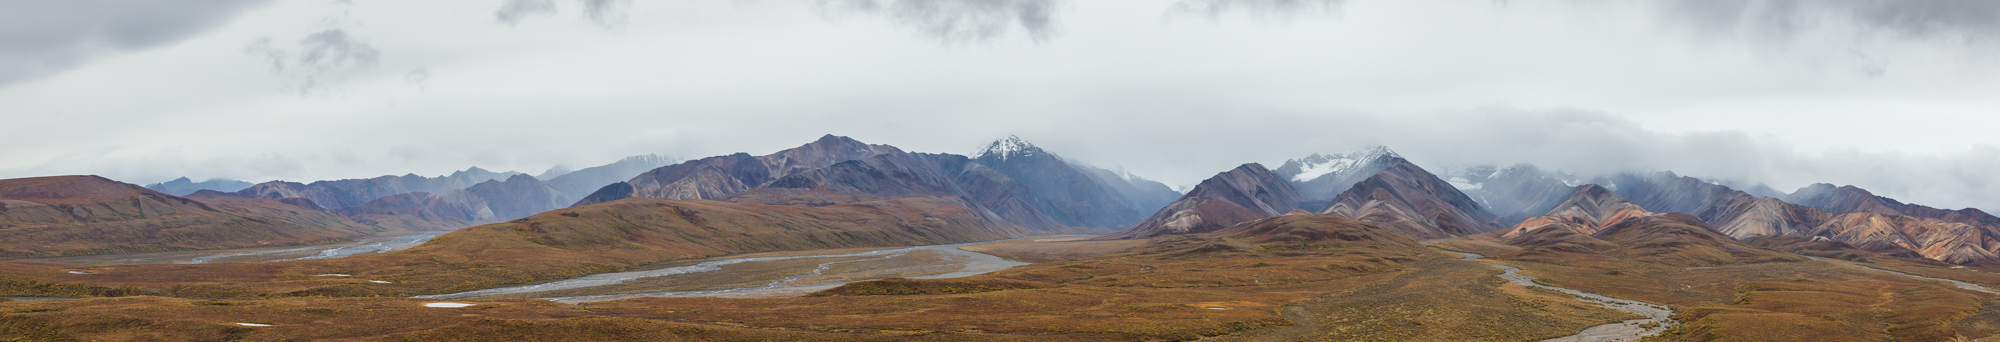 Landscape of Denali National Park from Eielson Visitor Center, Alaska, United States.